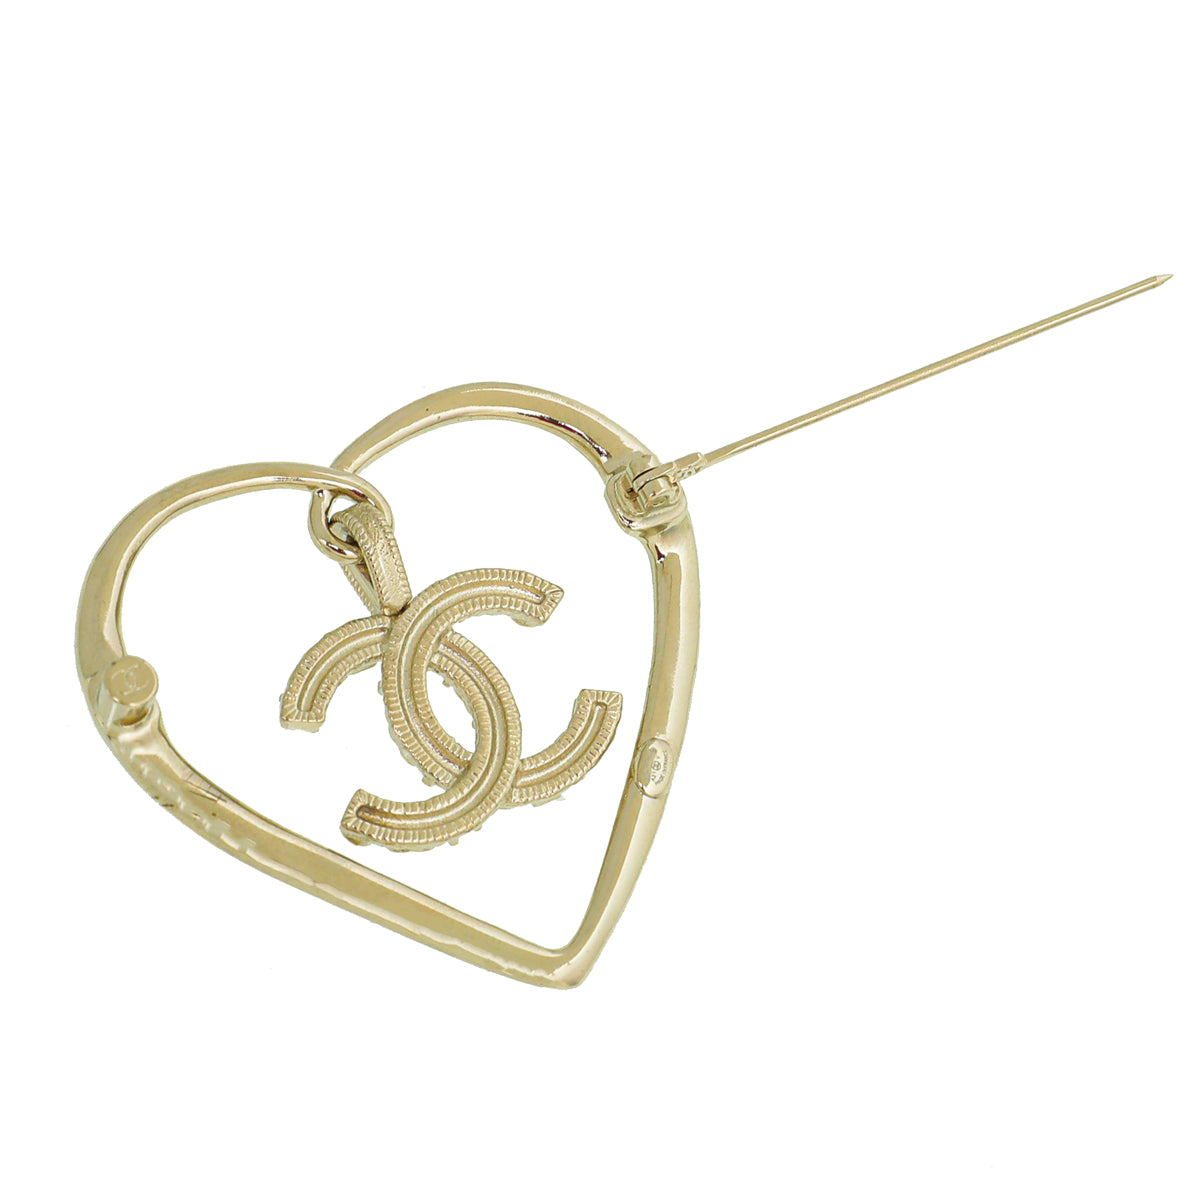 Chanel Gold CC Diamanté Heart Brooch